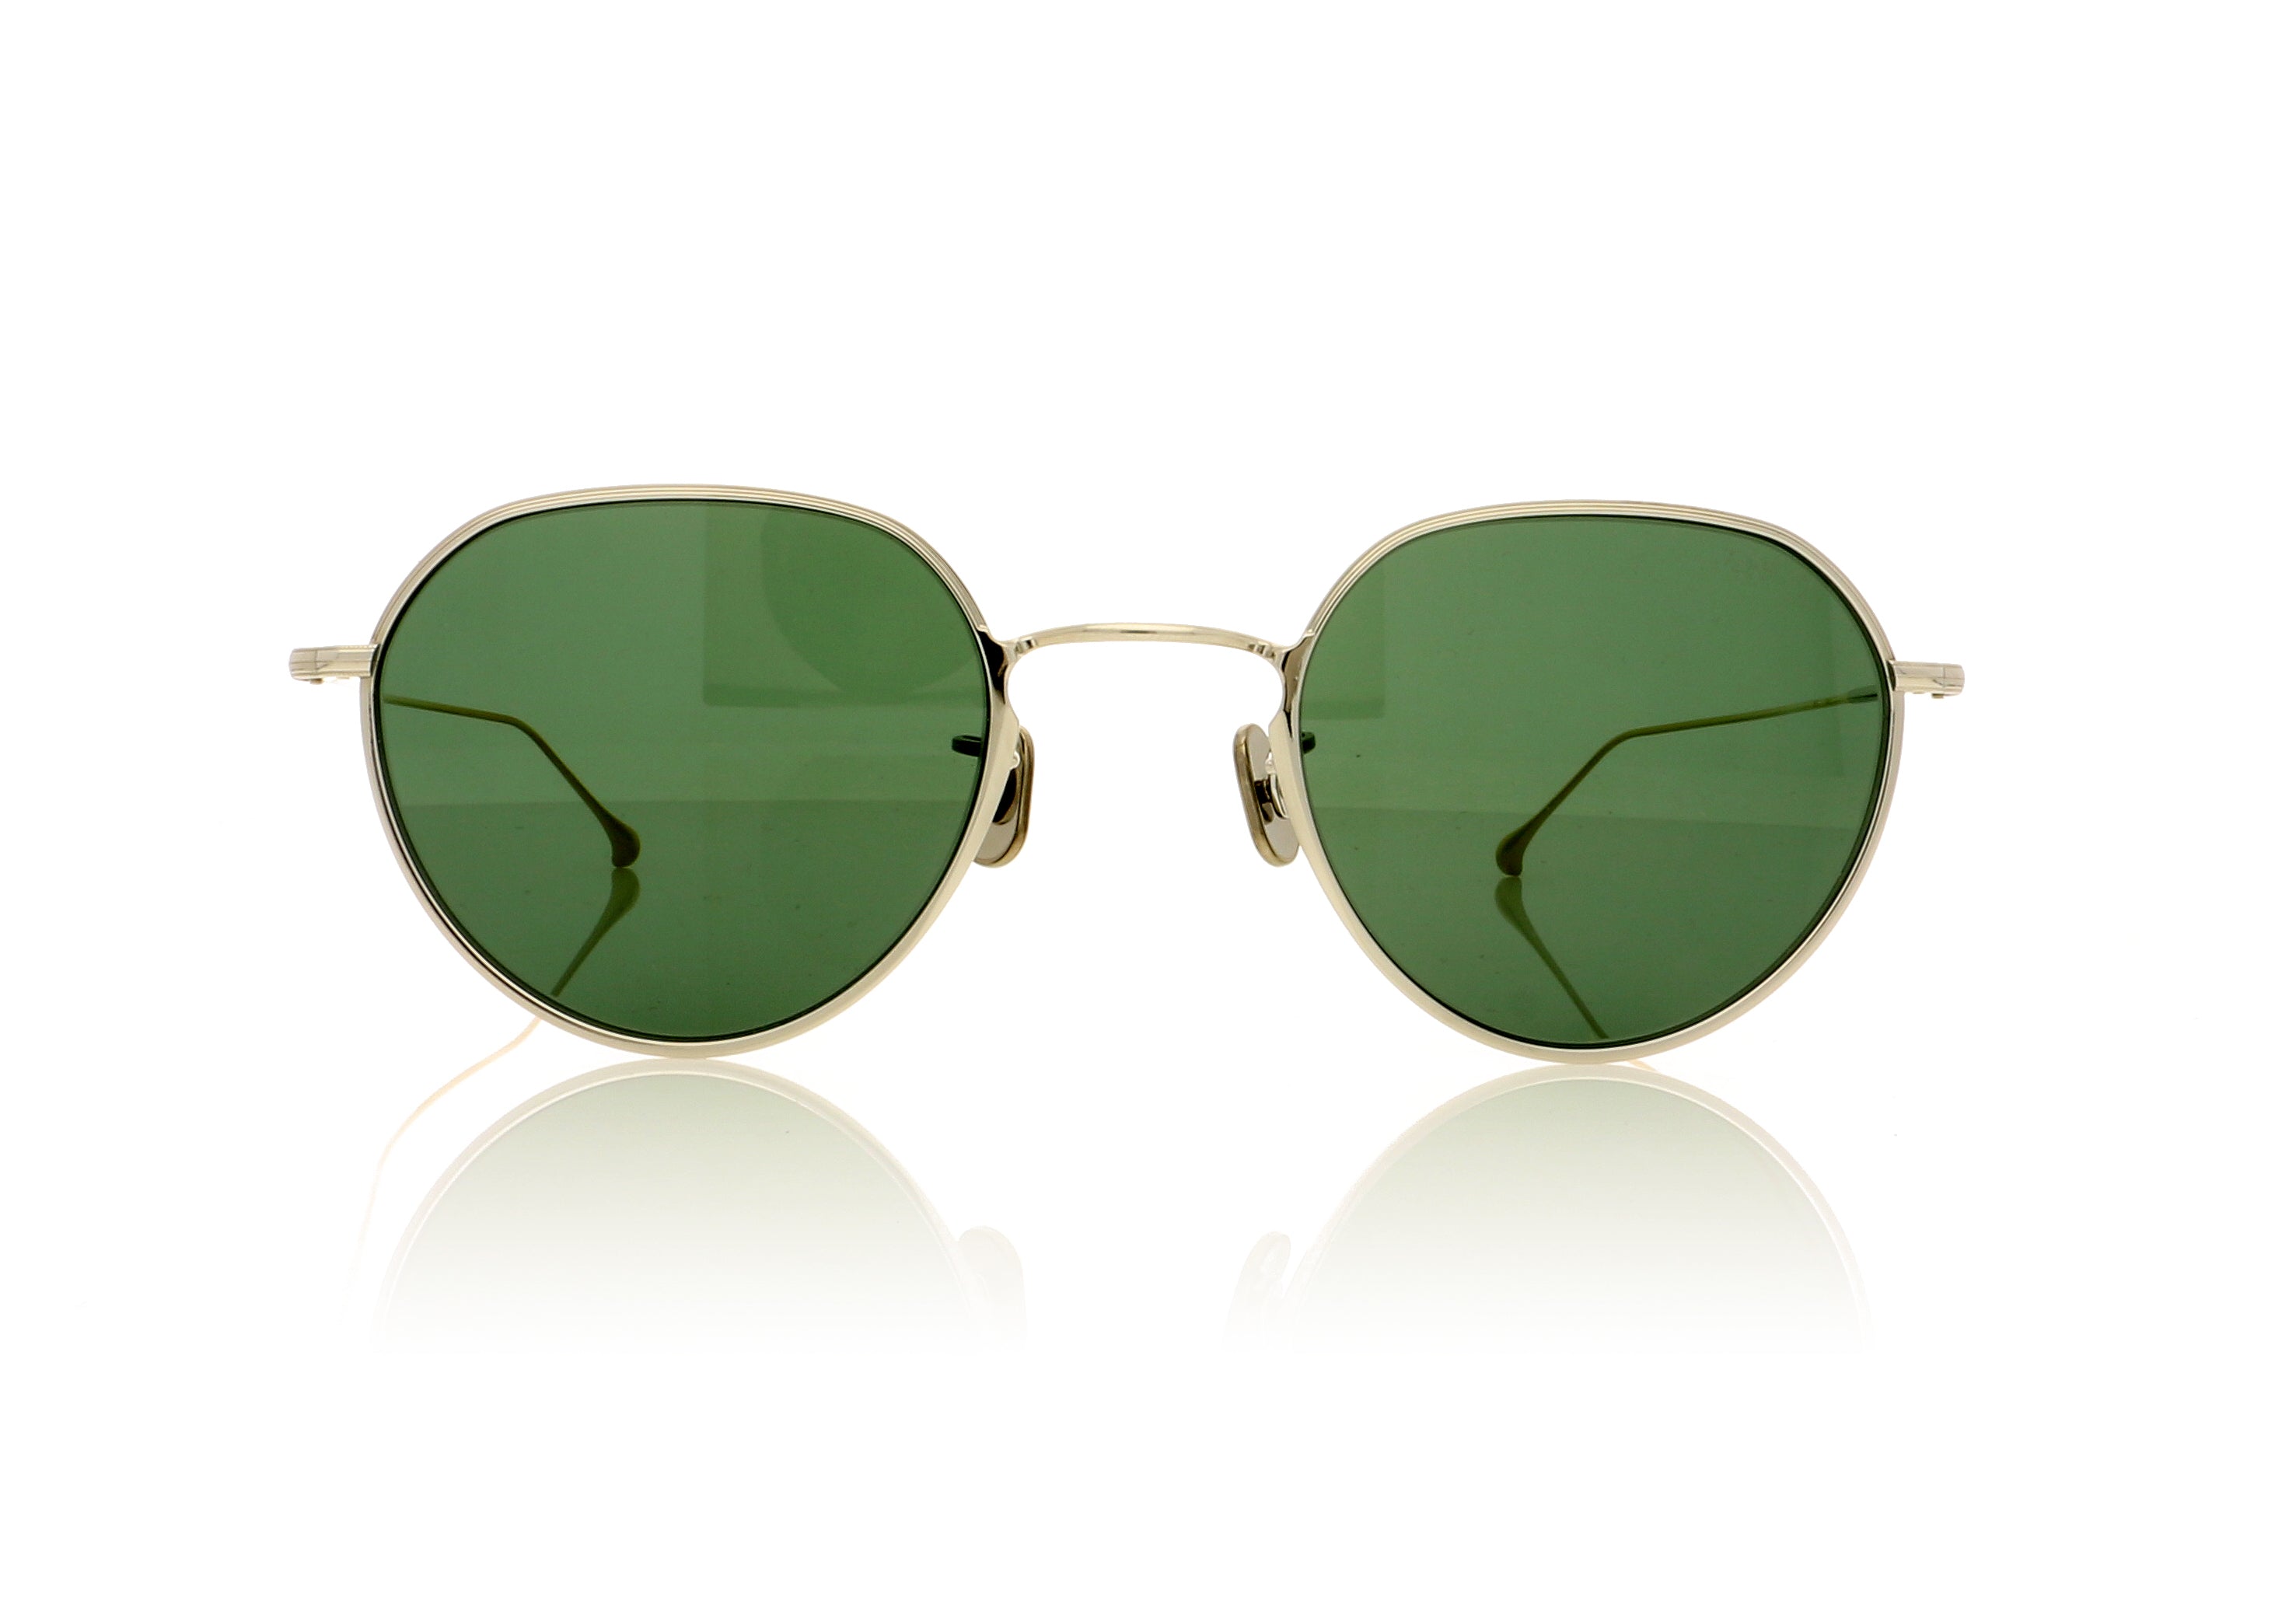 Eyevan 7285 765* 800-G Silver Sunglasses | OCO Glasses